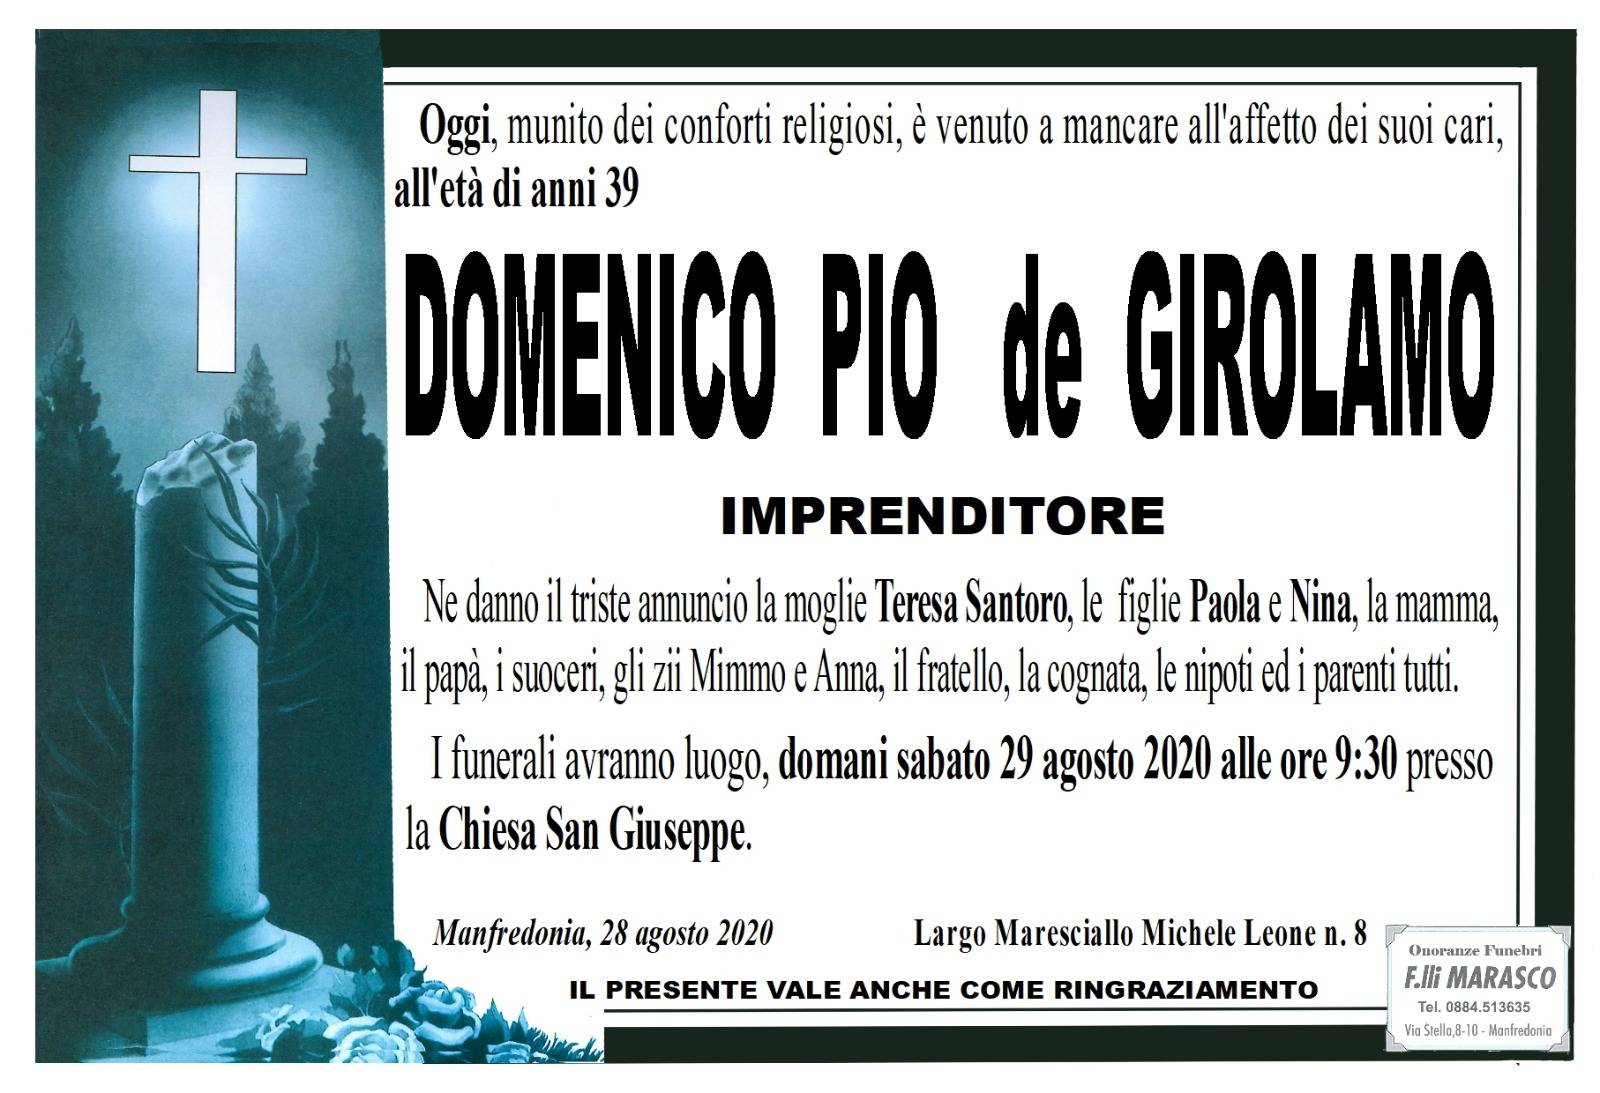 Domenico Pio De Girolamo